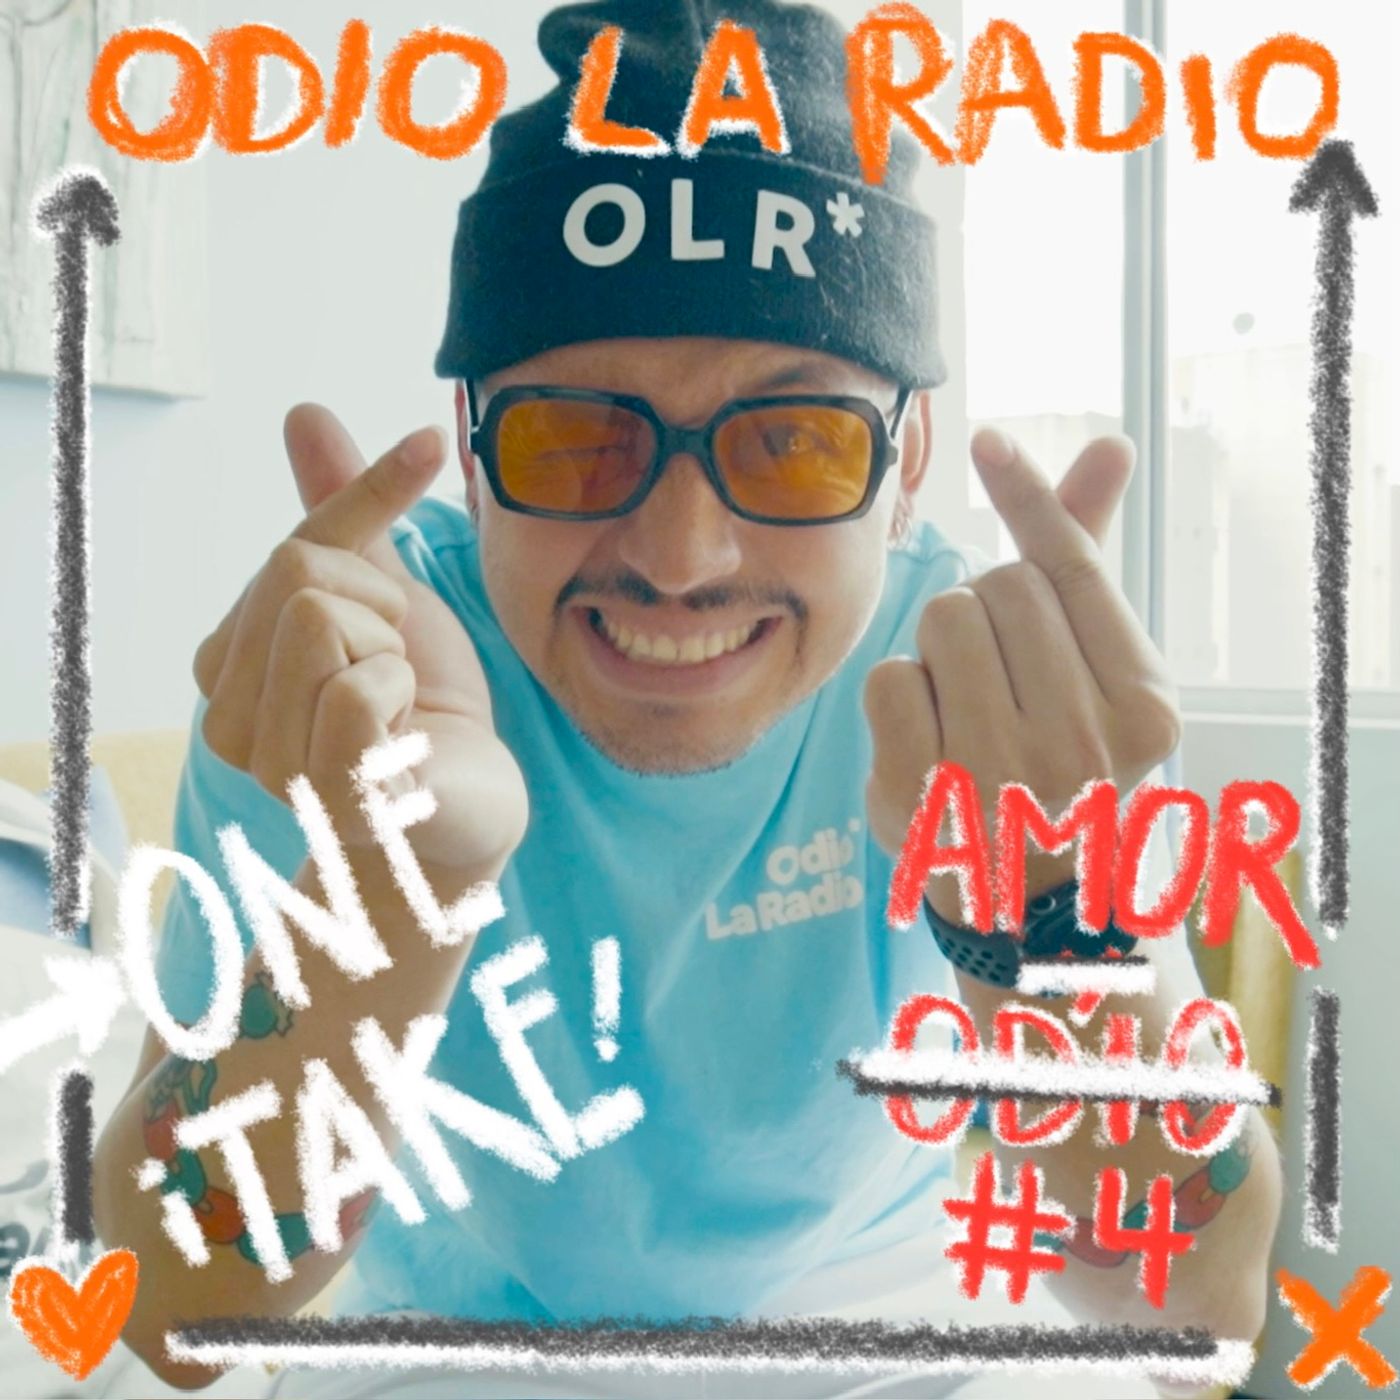 Odio La Radio - One Take #04: Amor y Odio: Amor.